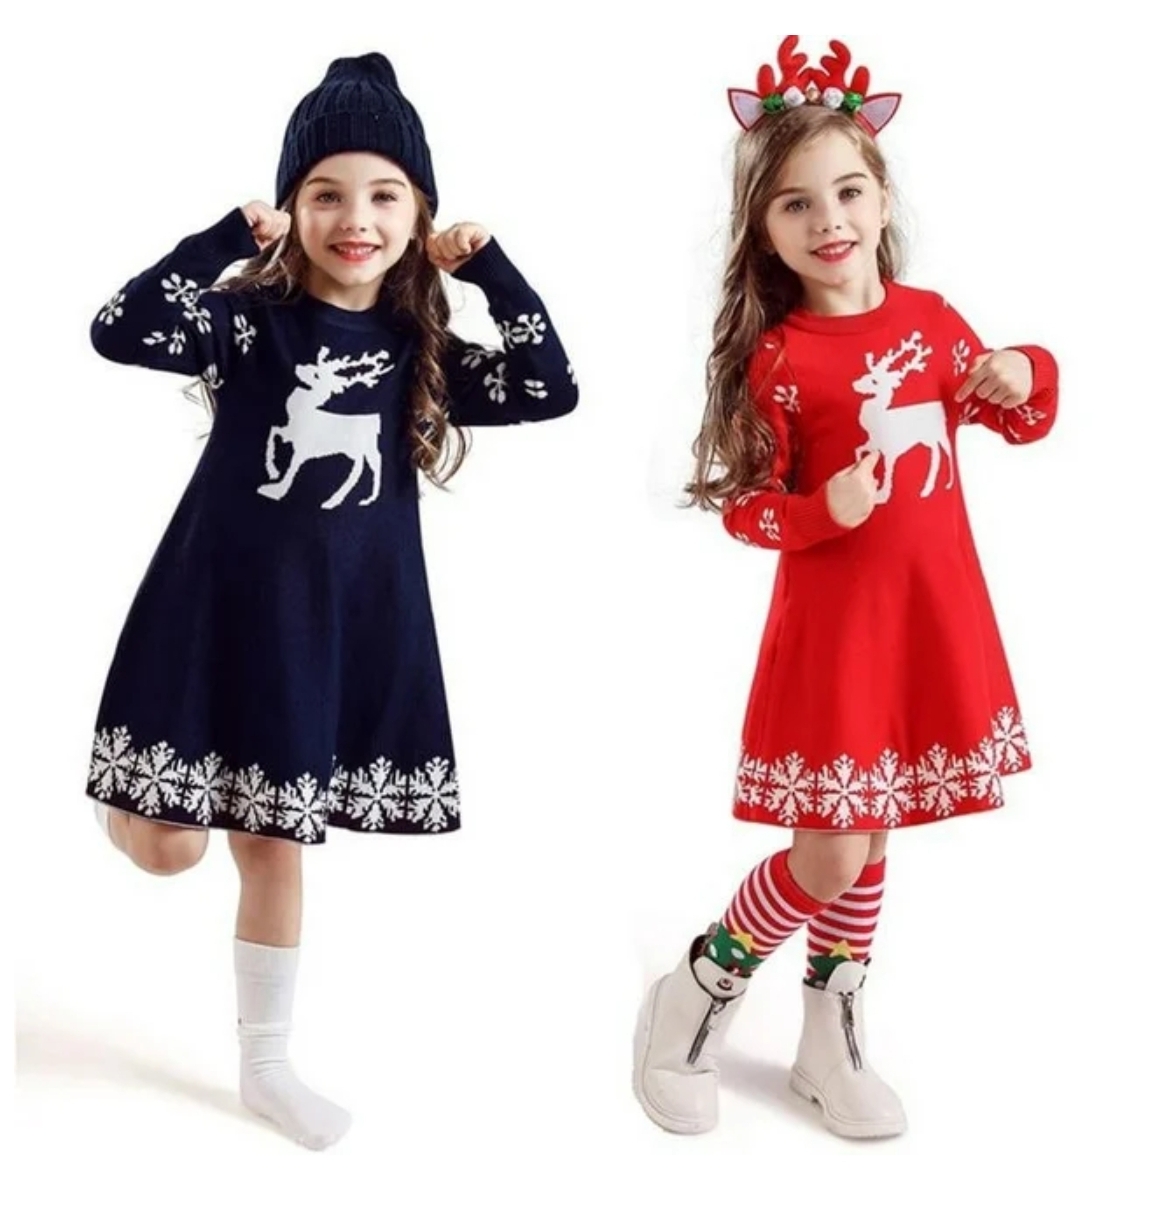 Smiling Pinker; Girls Christmas Reindeer & Snowflakes Knitted Sweater Dress. RRP £39.00